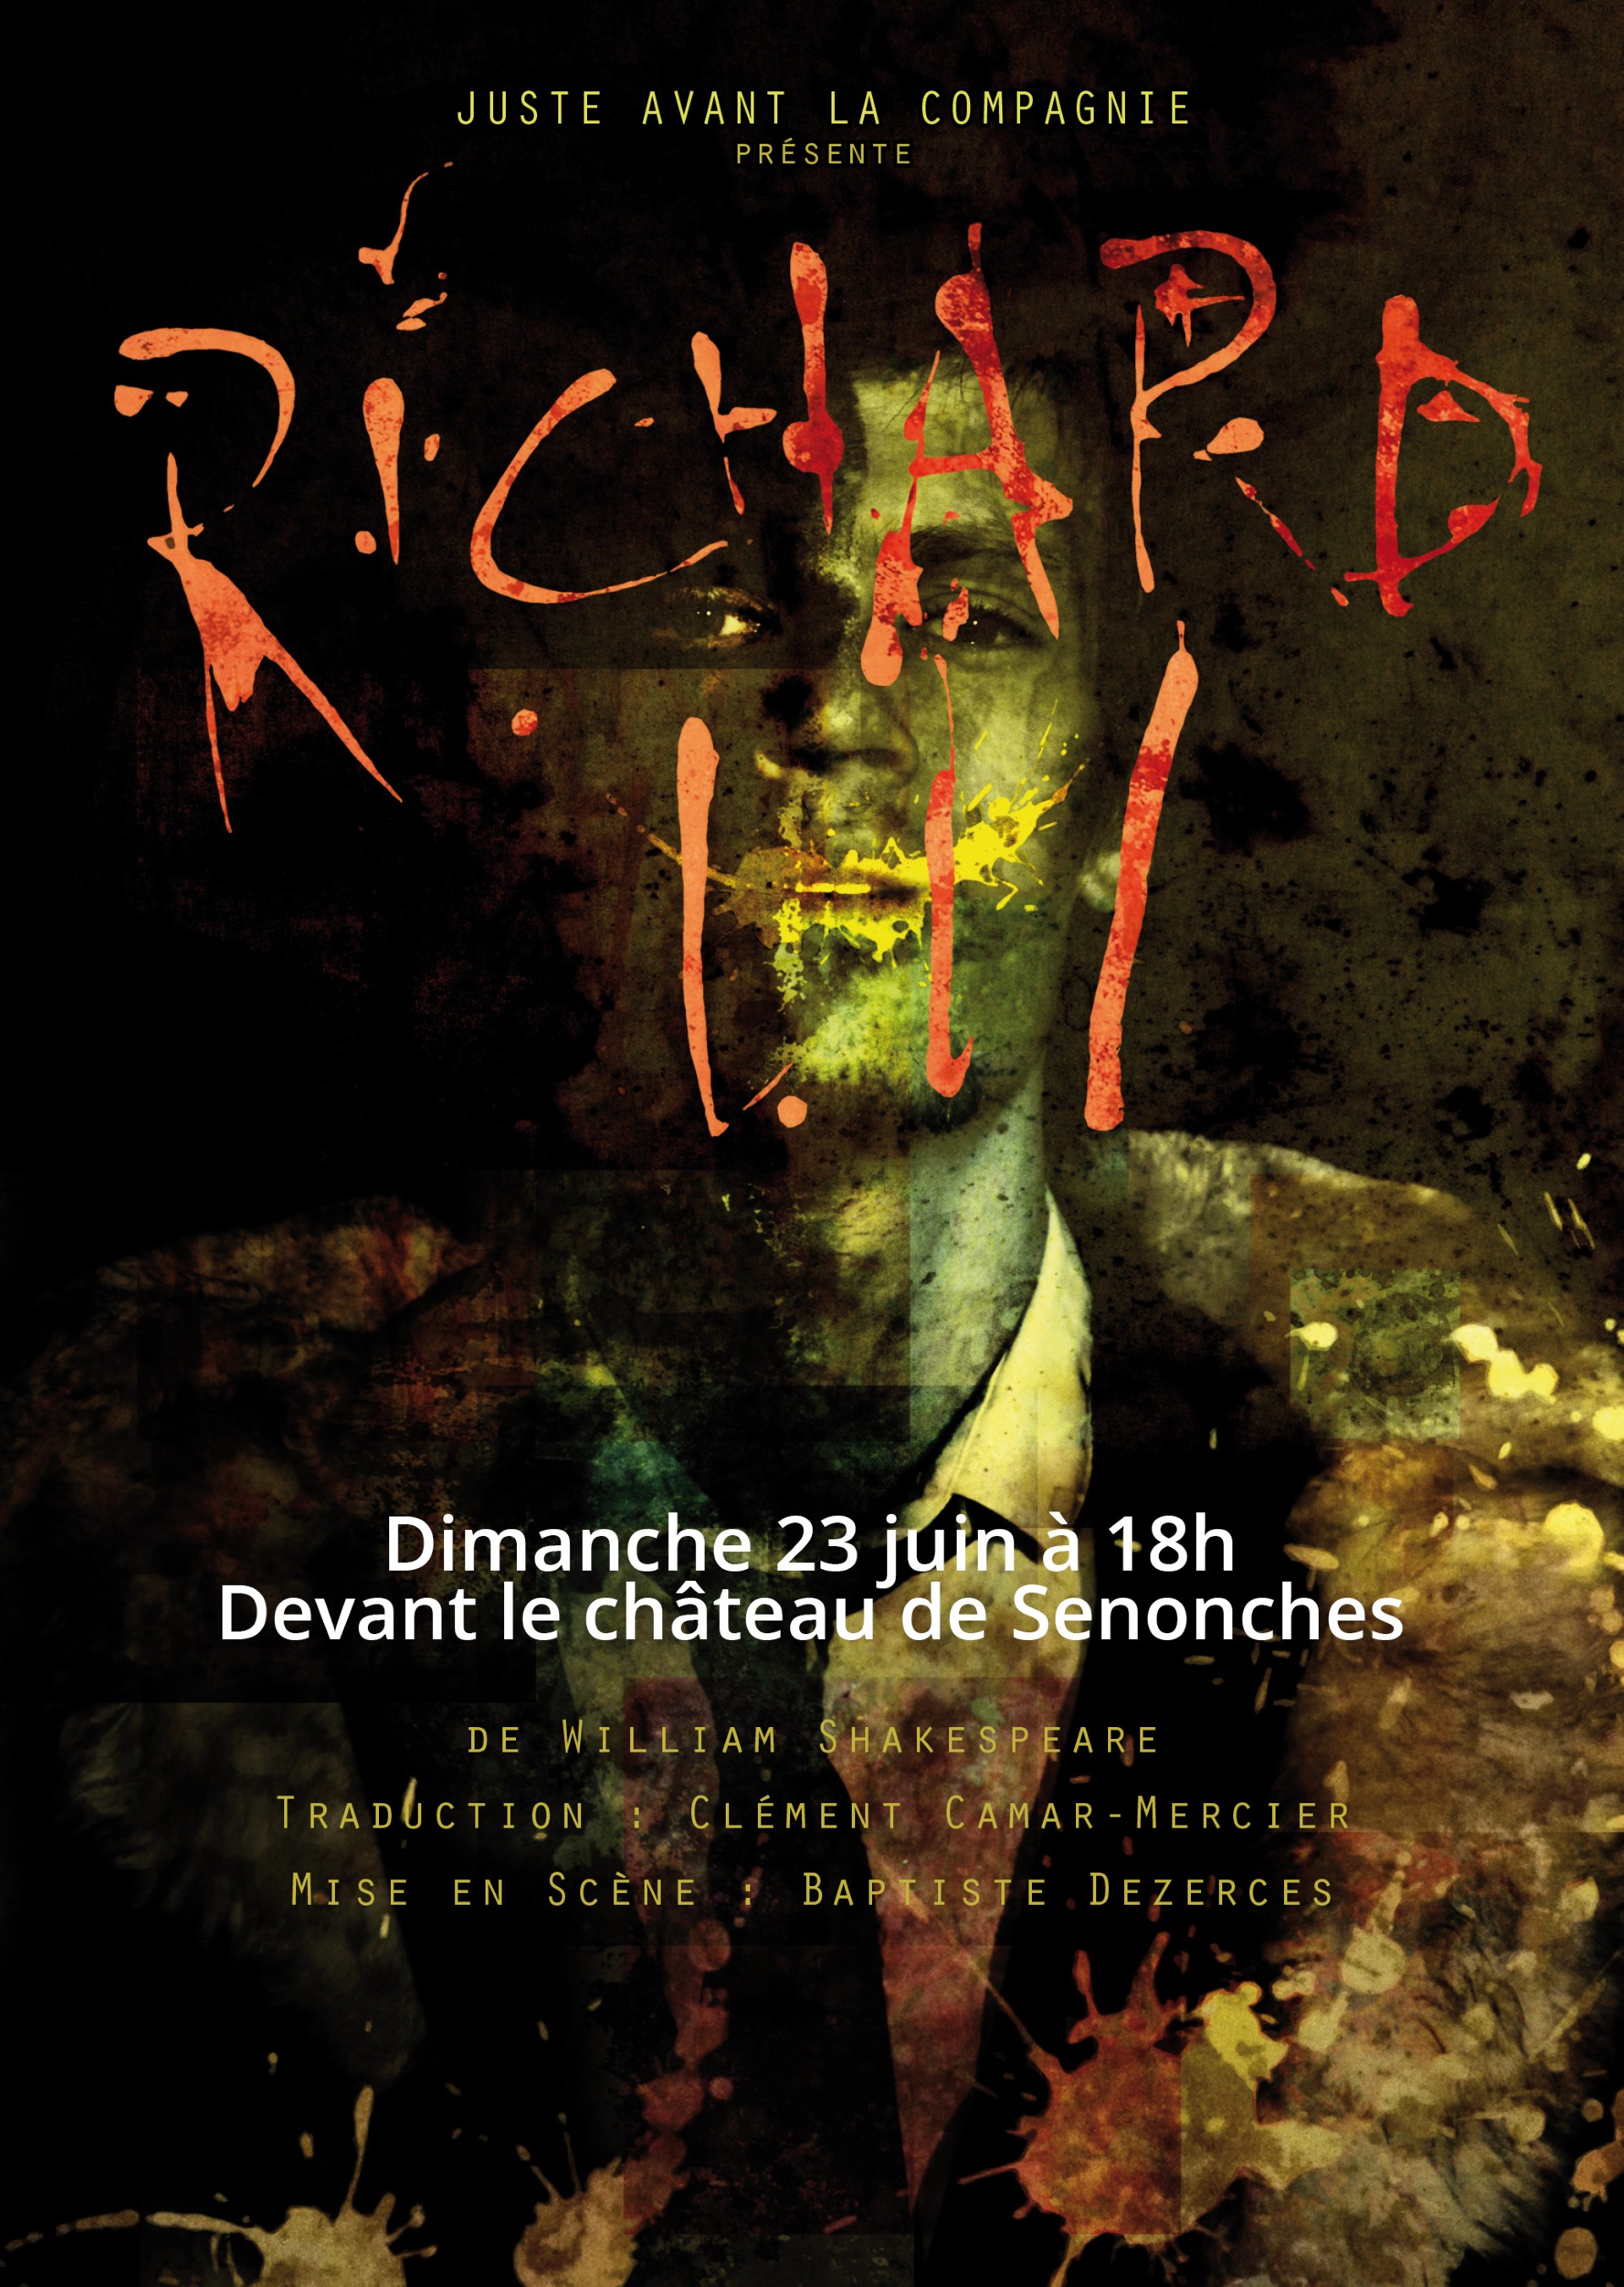 Festival de théâtre en plein air - La tragédie du roi Richard III de William Shakespeare null France null null null null